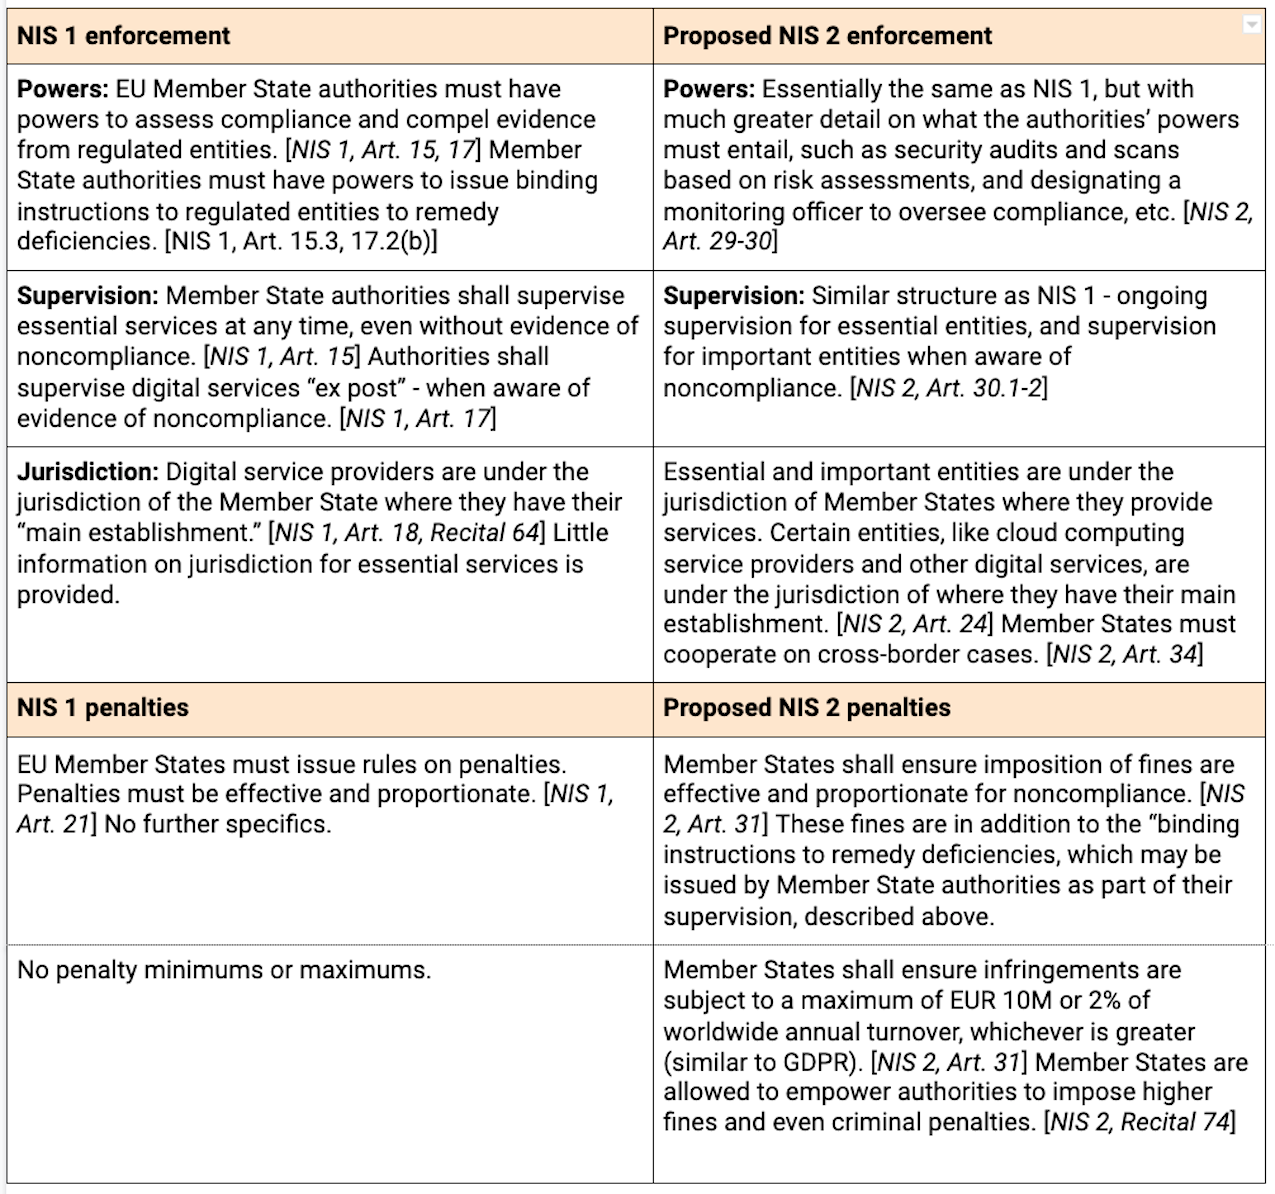 Enforcement-and-penalties-NIS-2-proposal-2020-Rapid7